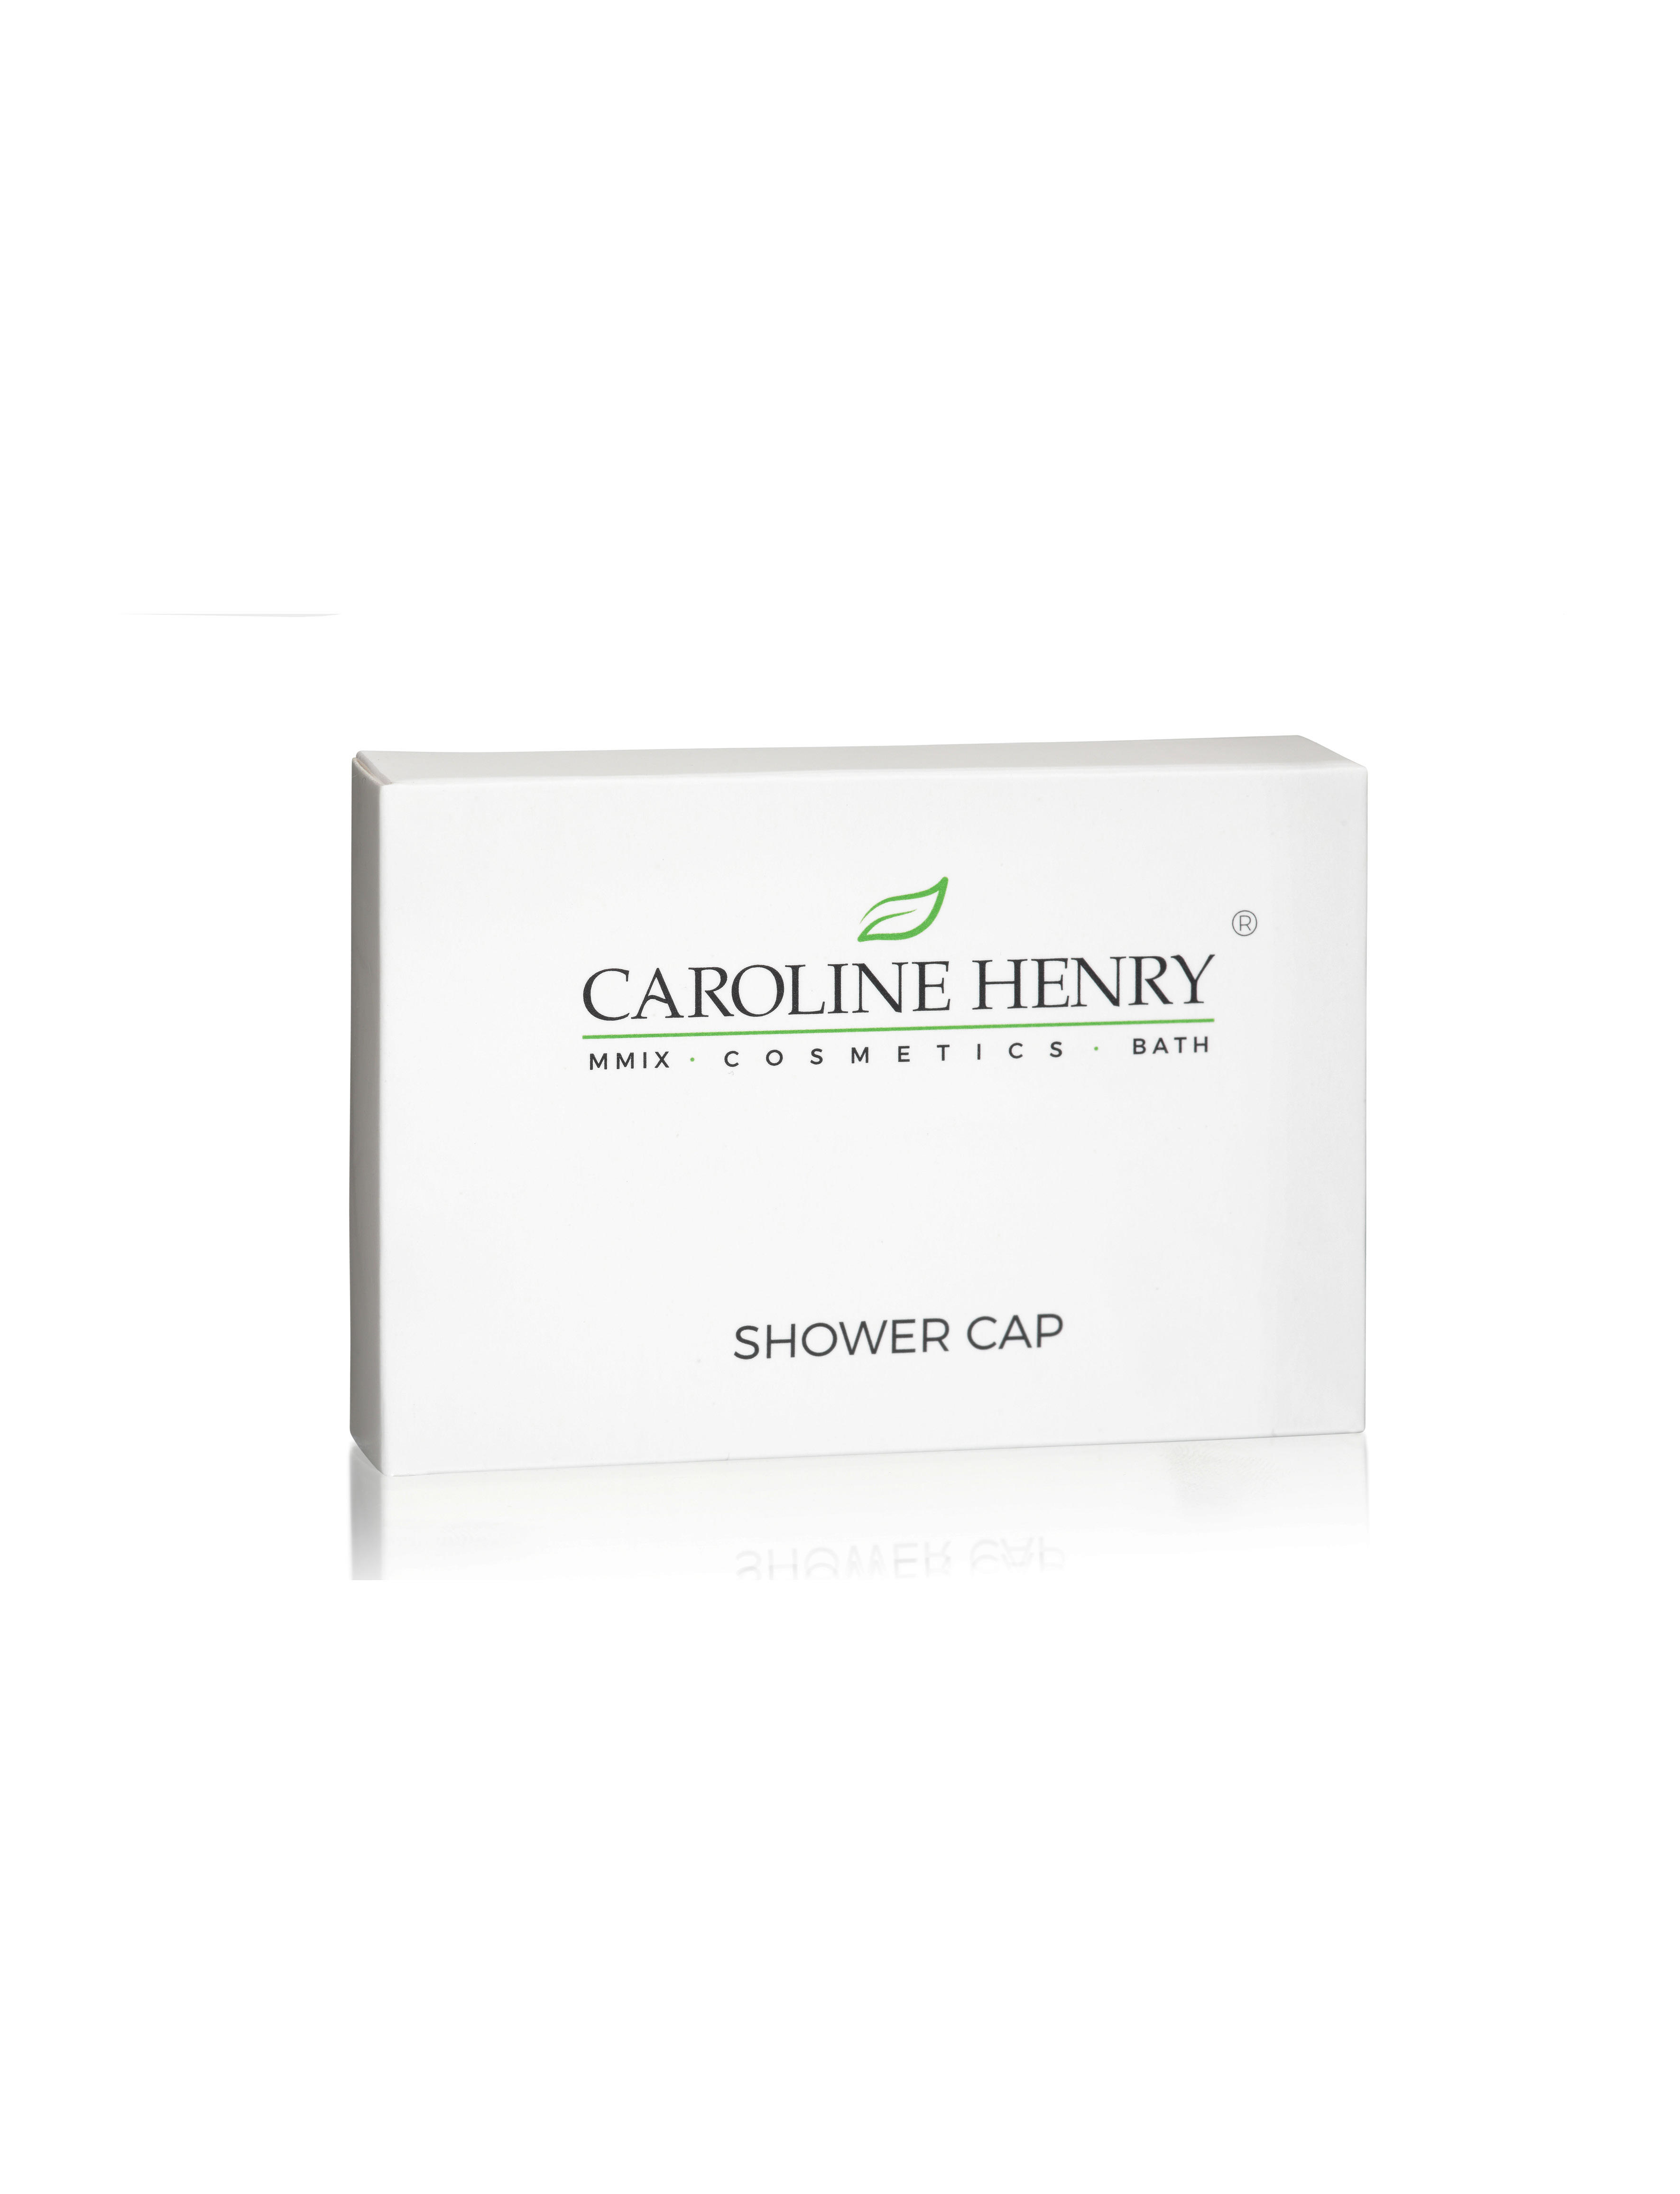 Hotel Shower Cap in White Carton